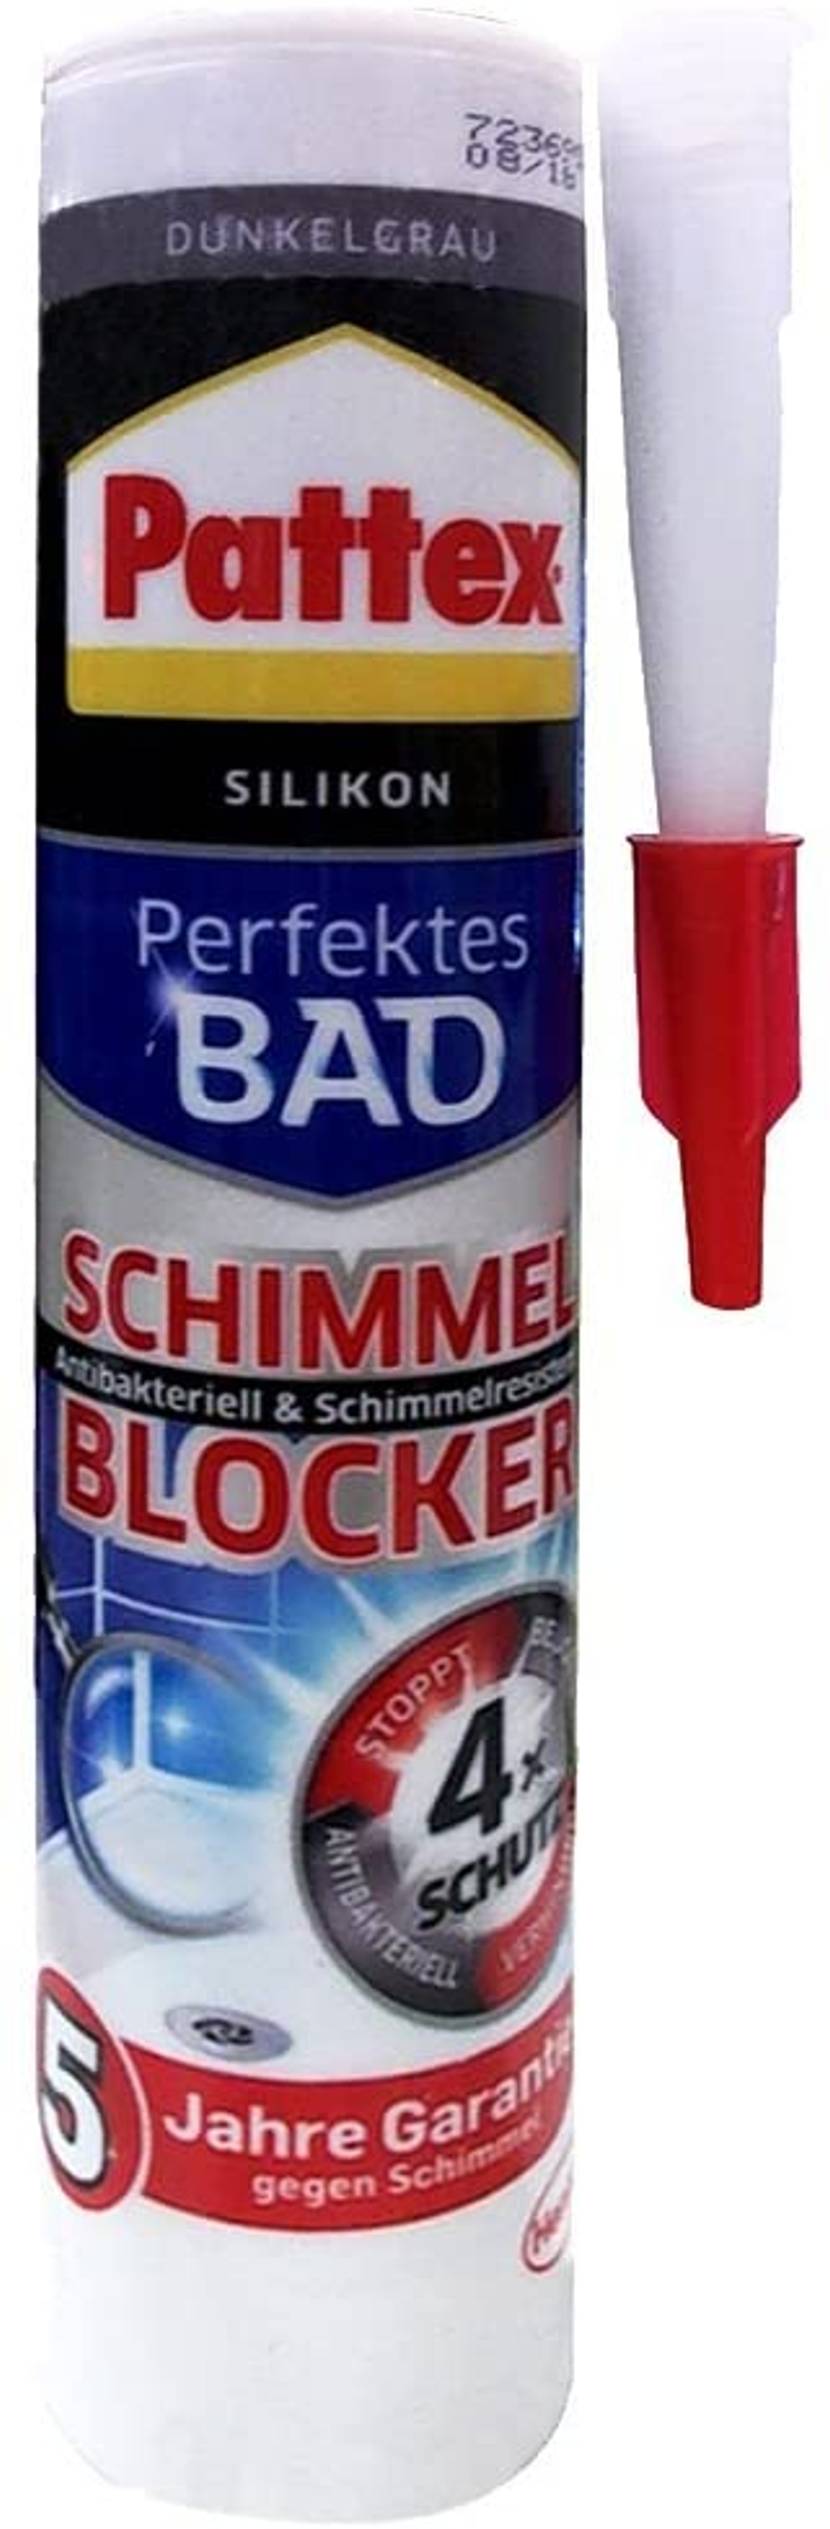 Pattex Perfektes Bad Schimmelblocker Sanitärsilikon